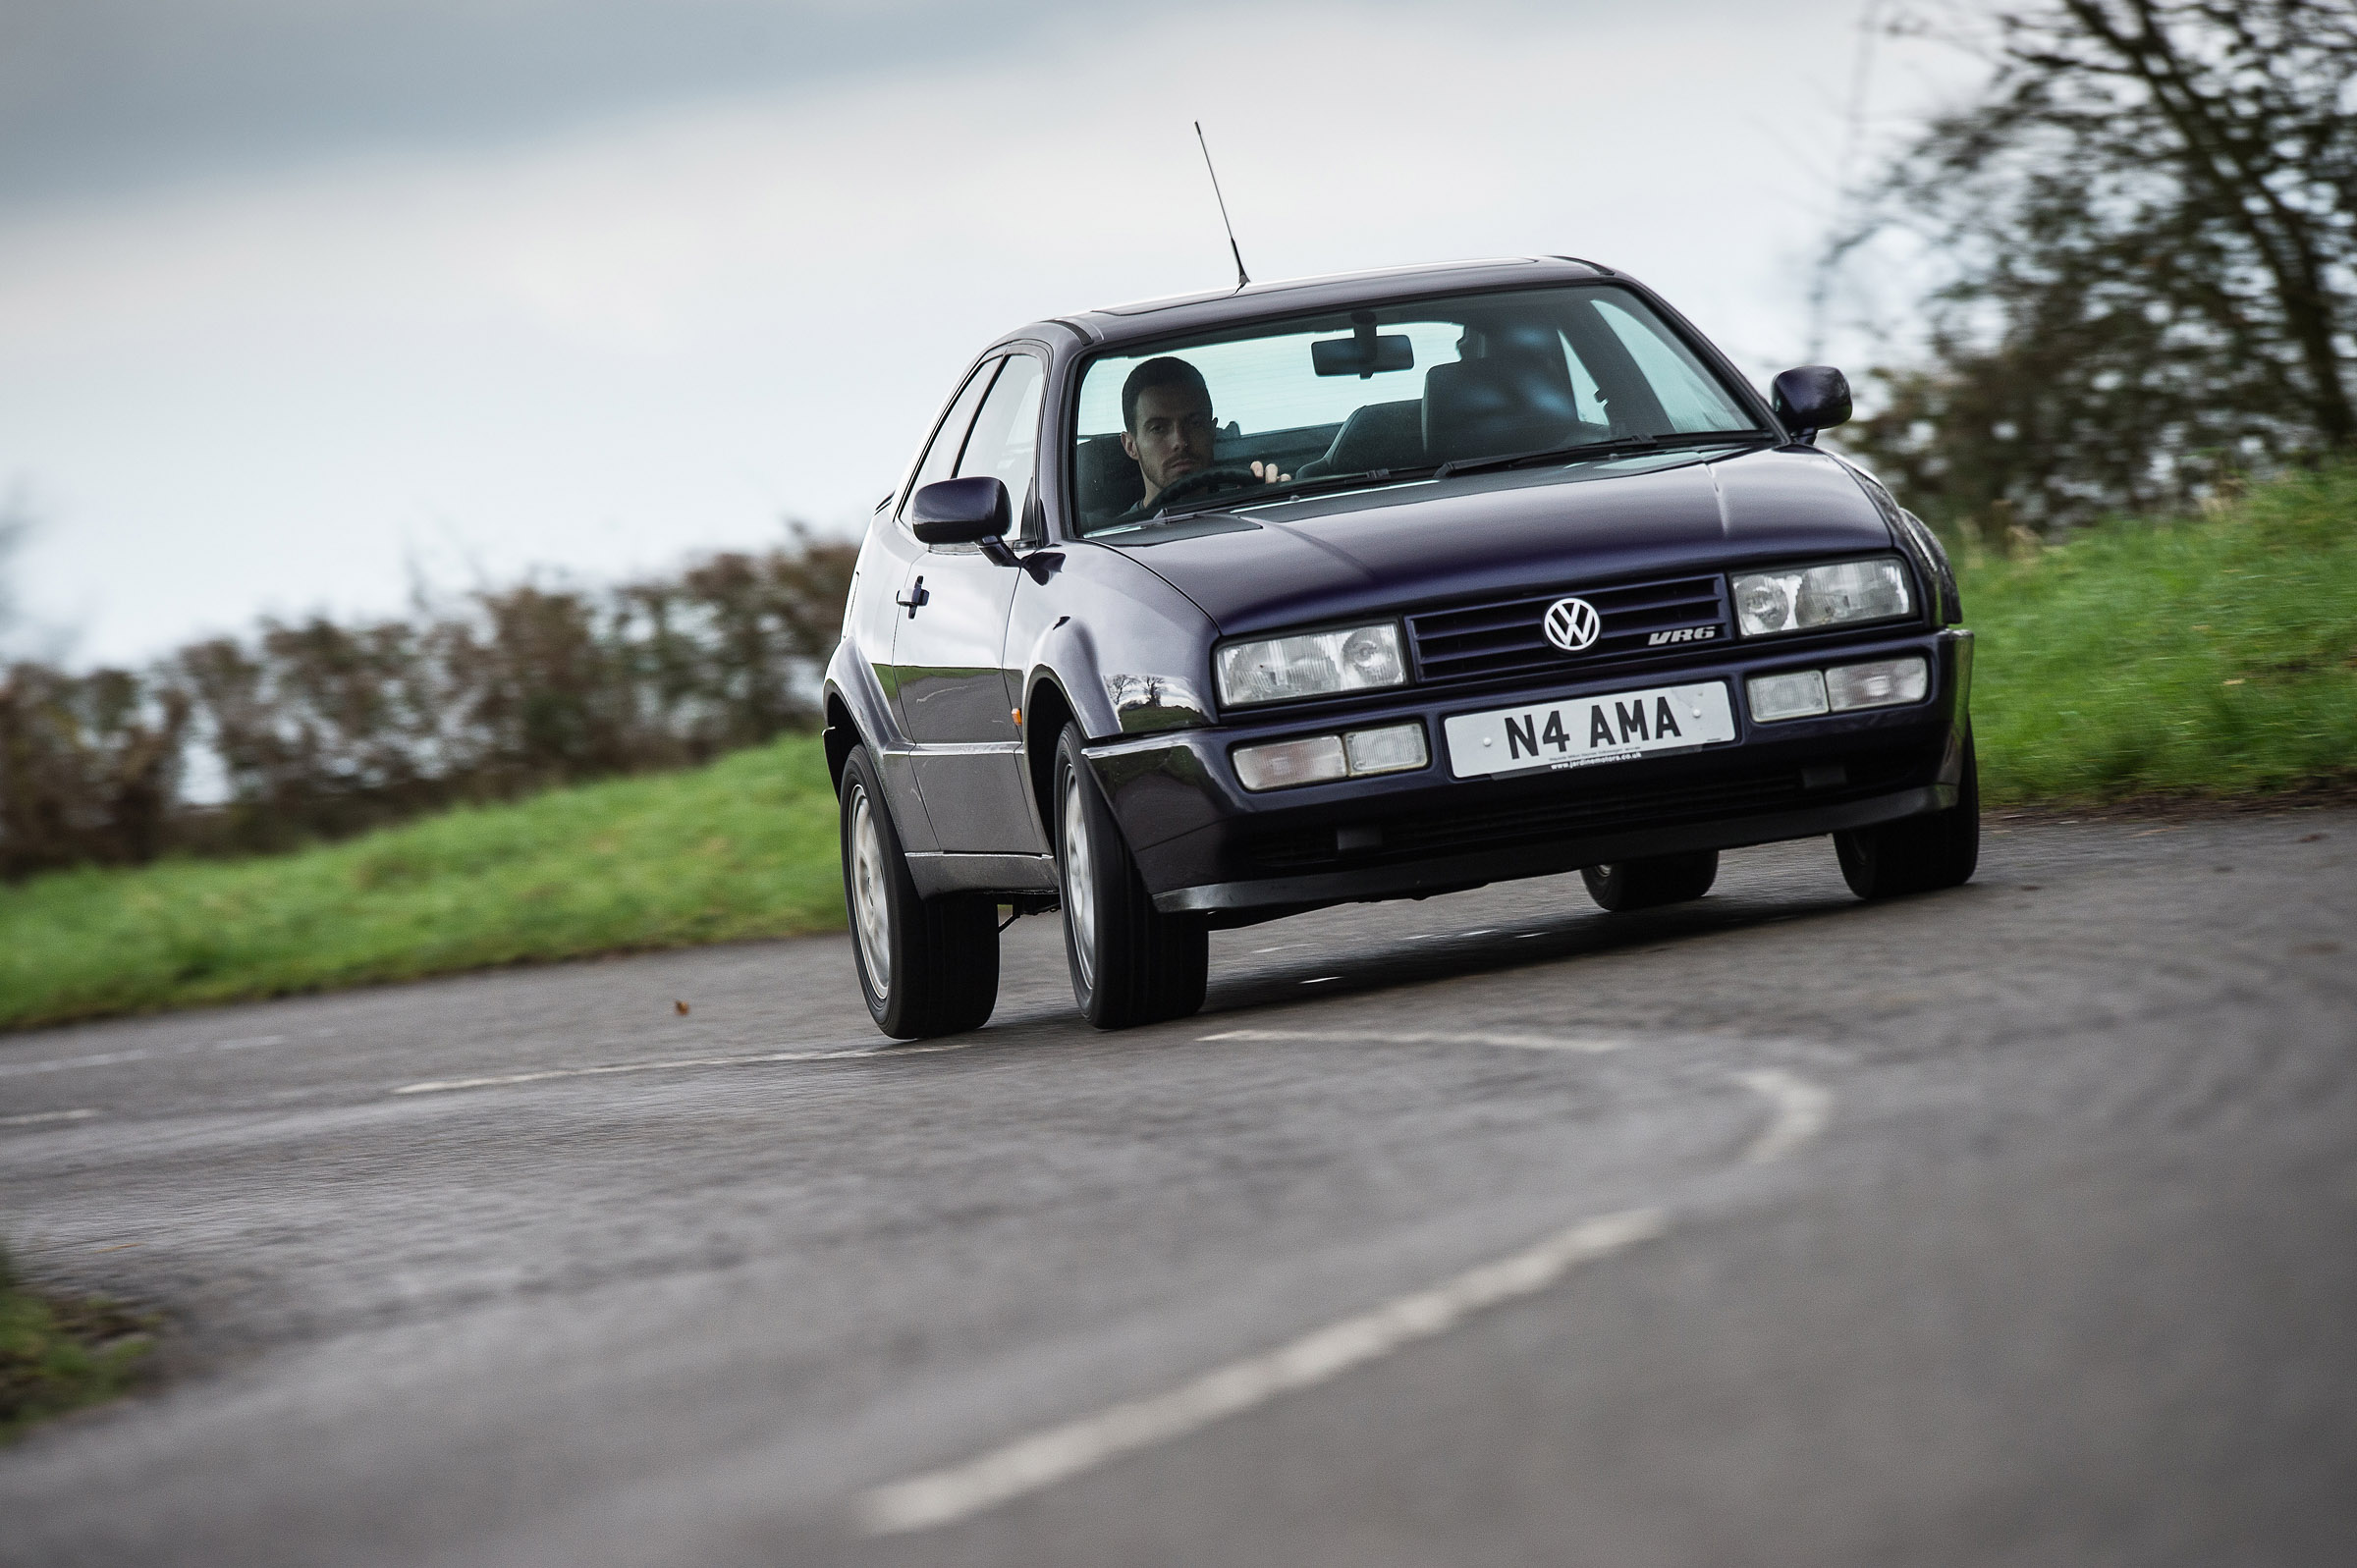 Volkswagen Corrado Vr6 Review History And Specs Evo